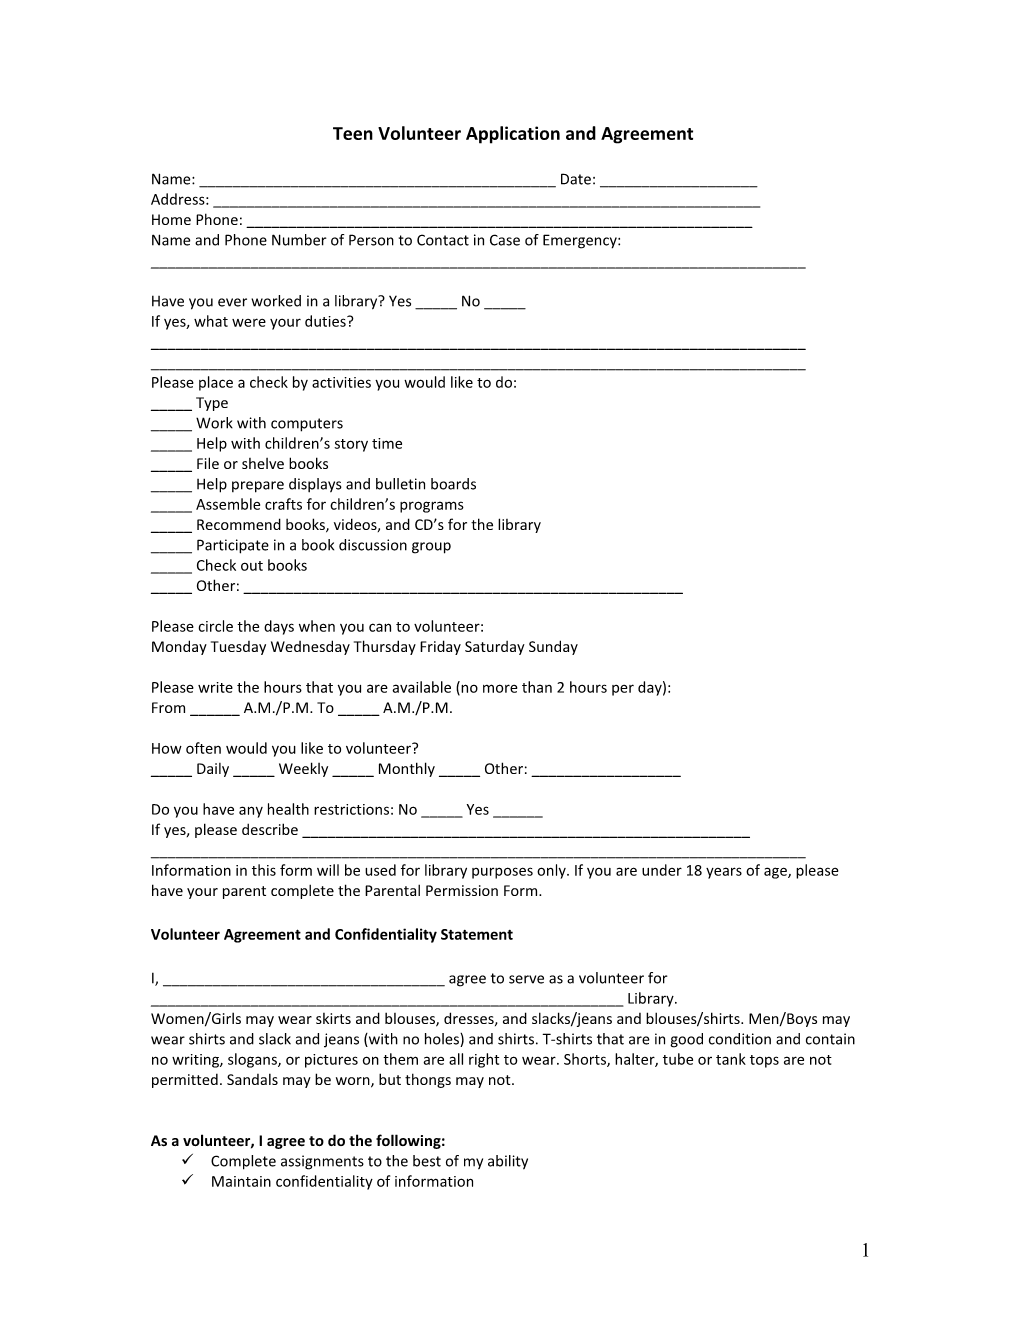 SAMPLE: Volunteer Information Form